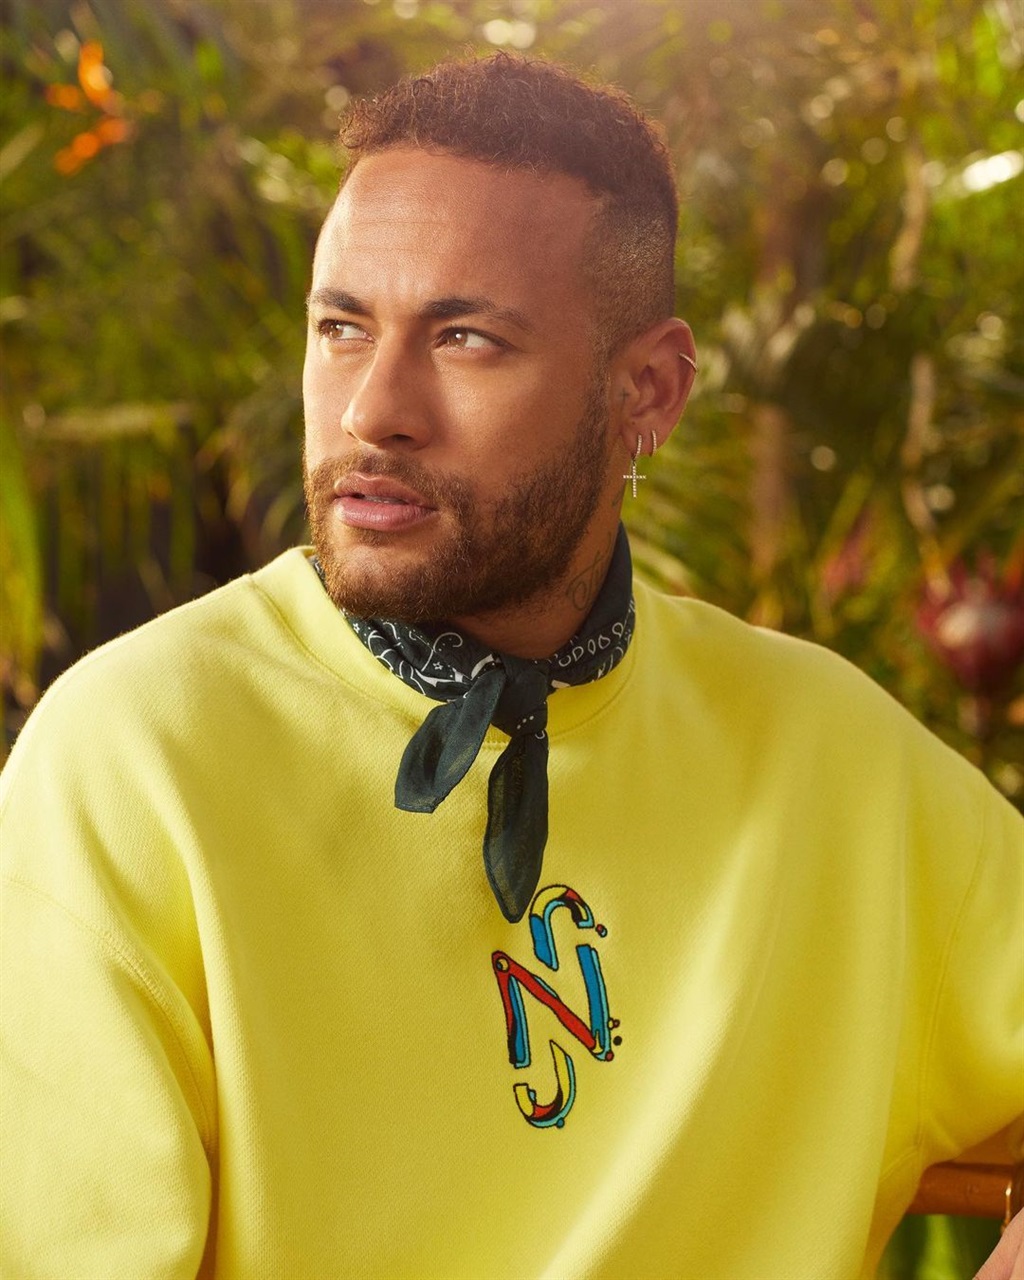 The Puma t-shirt worn by Neymar on his Instagram account @neymarjr